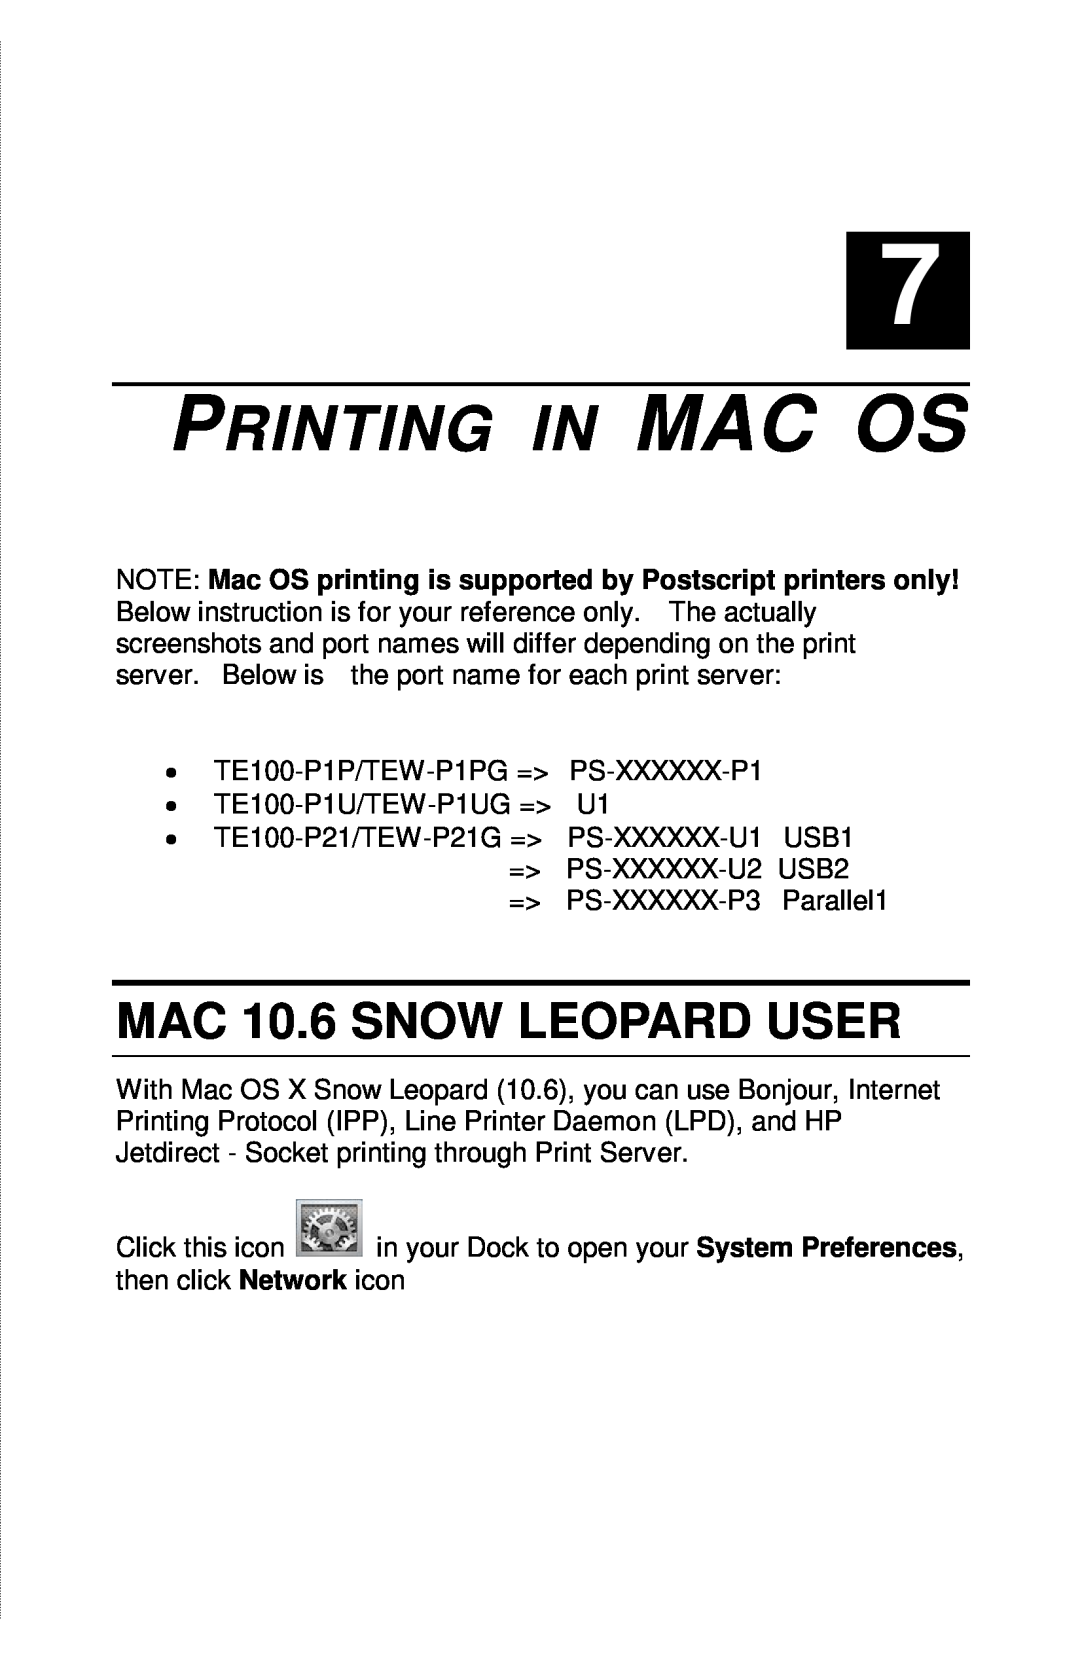 TRENDnet TE100-PIP manual Printing In Mac Os, MAC 10.6 SNOW LEOPARD USER 